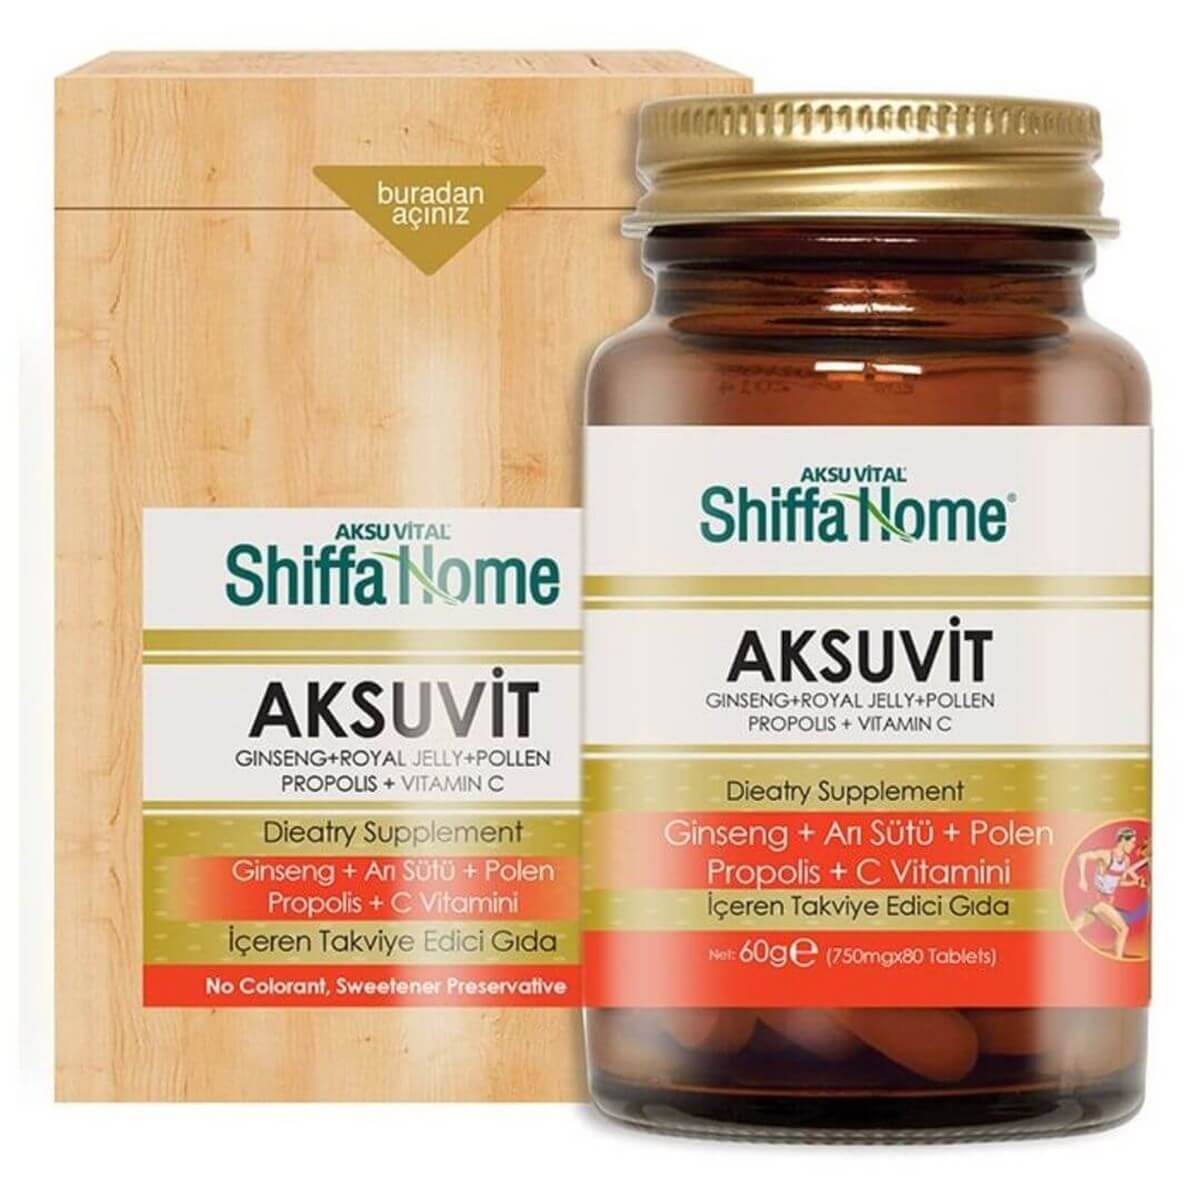 Aksu Vital Shiffa Home Aksuvit Tablet Tahta Kutu - 80 X 750 mg